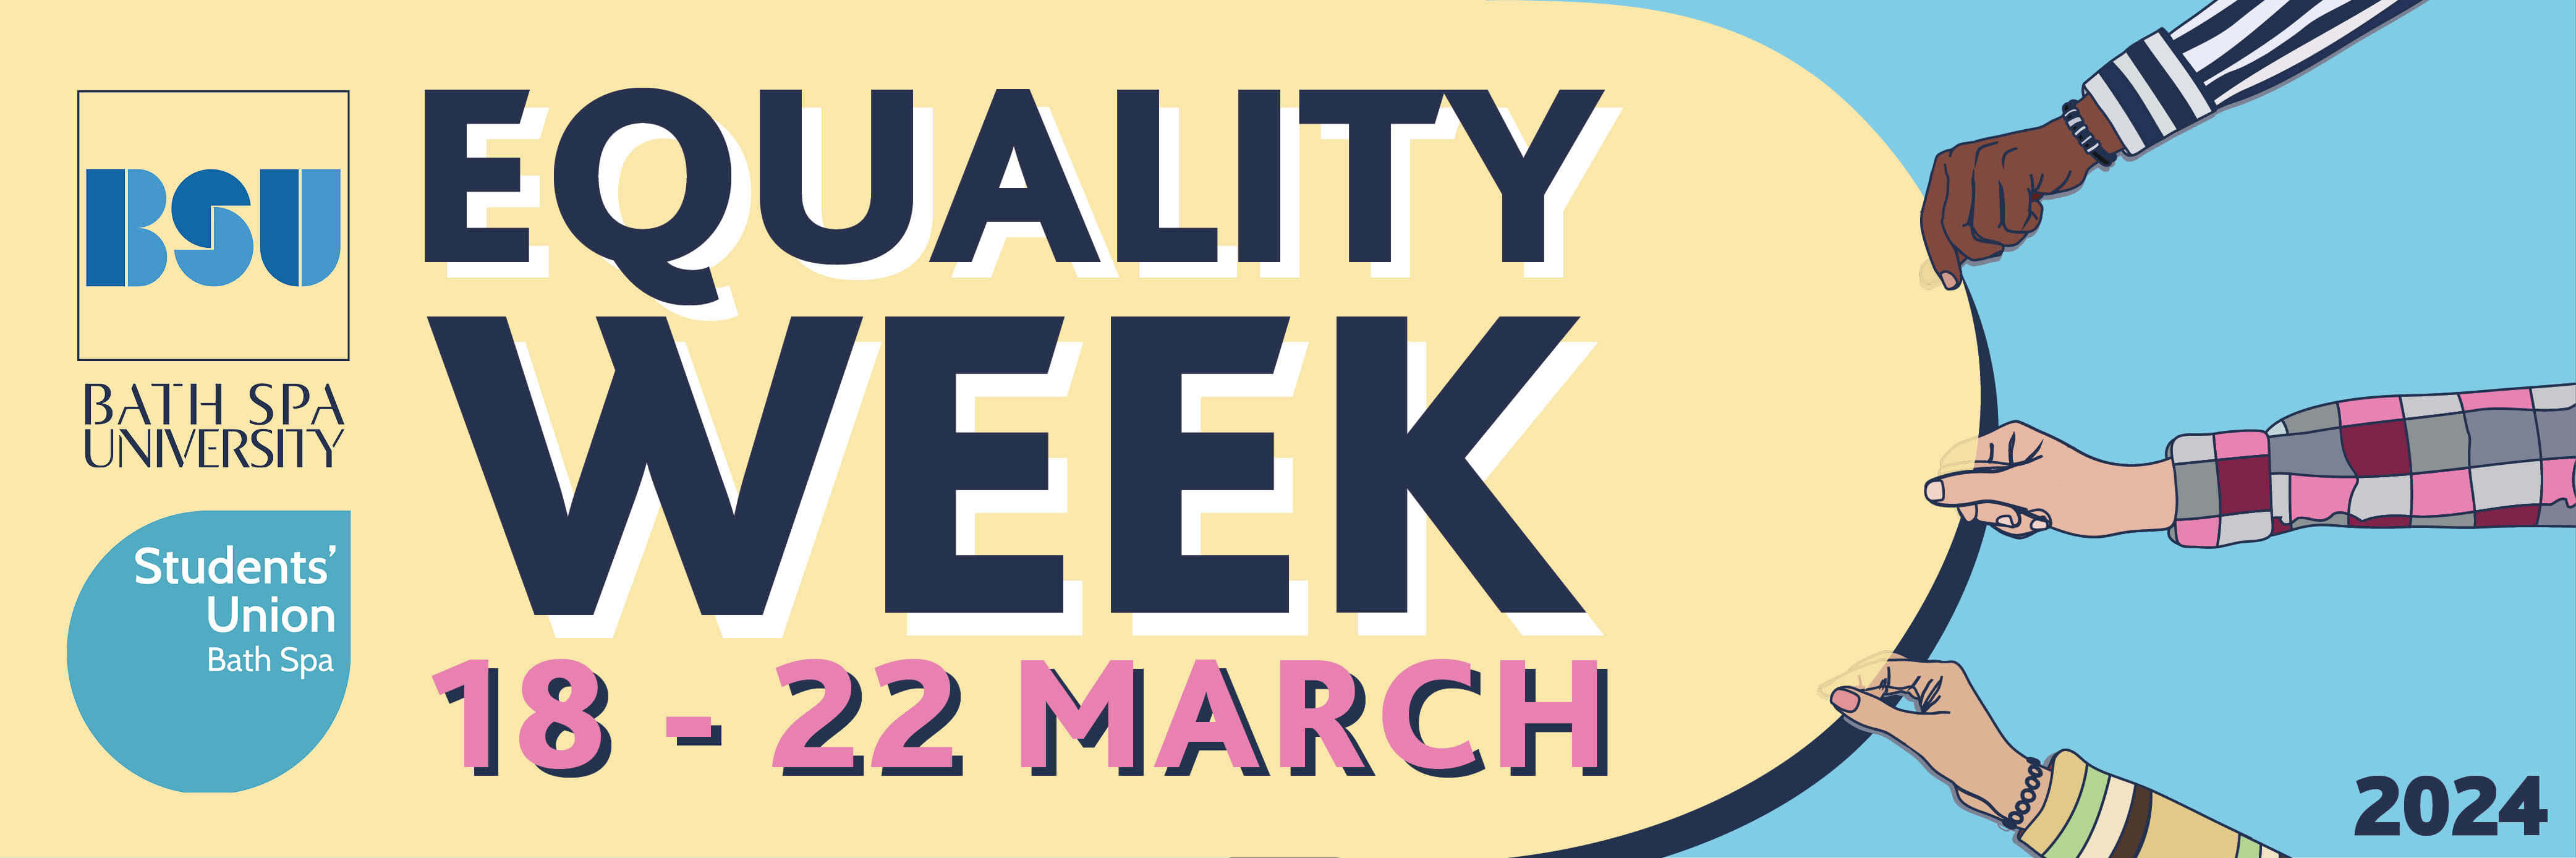 Equality Week 18-22 March Bath Spa University